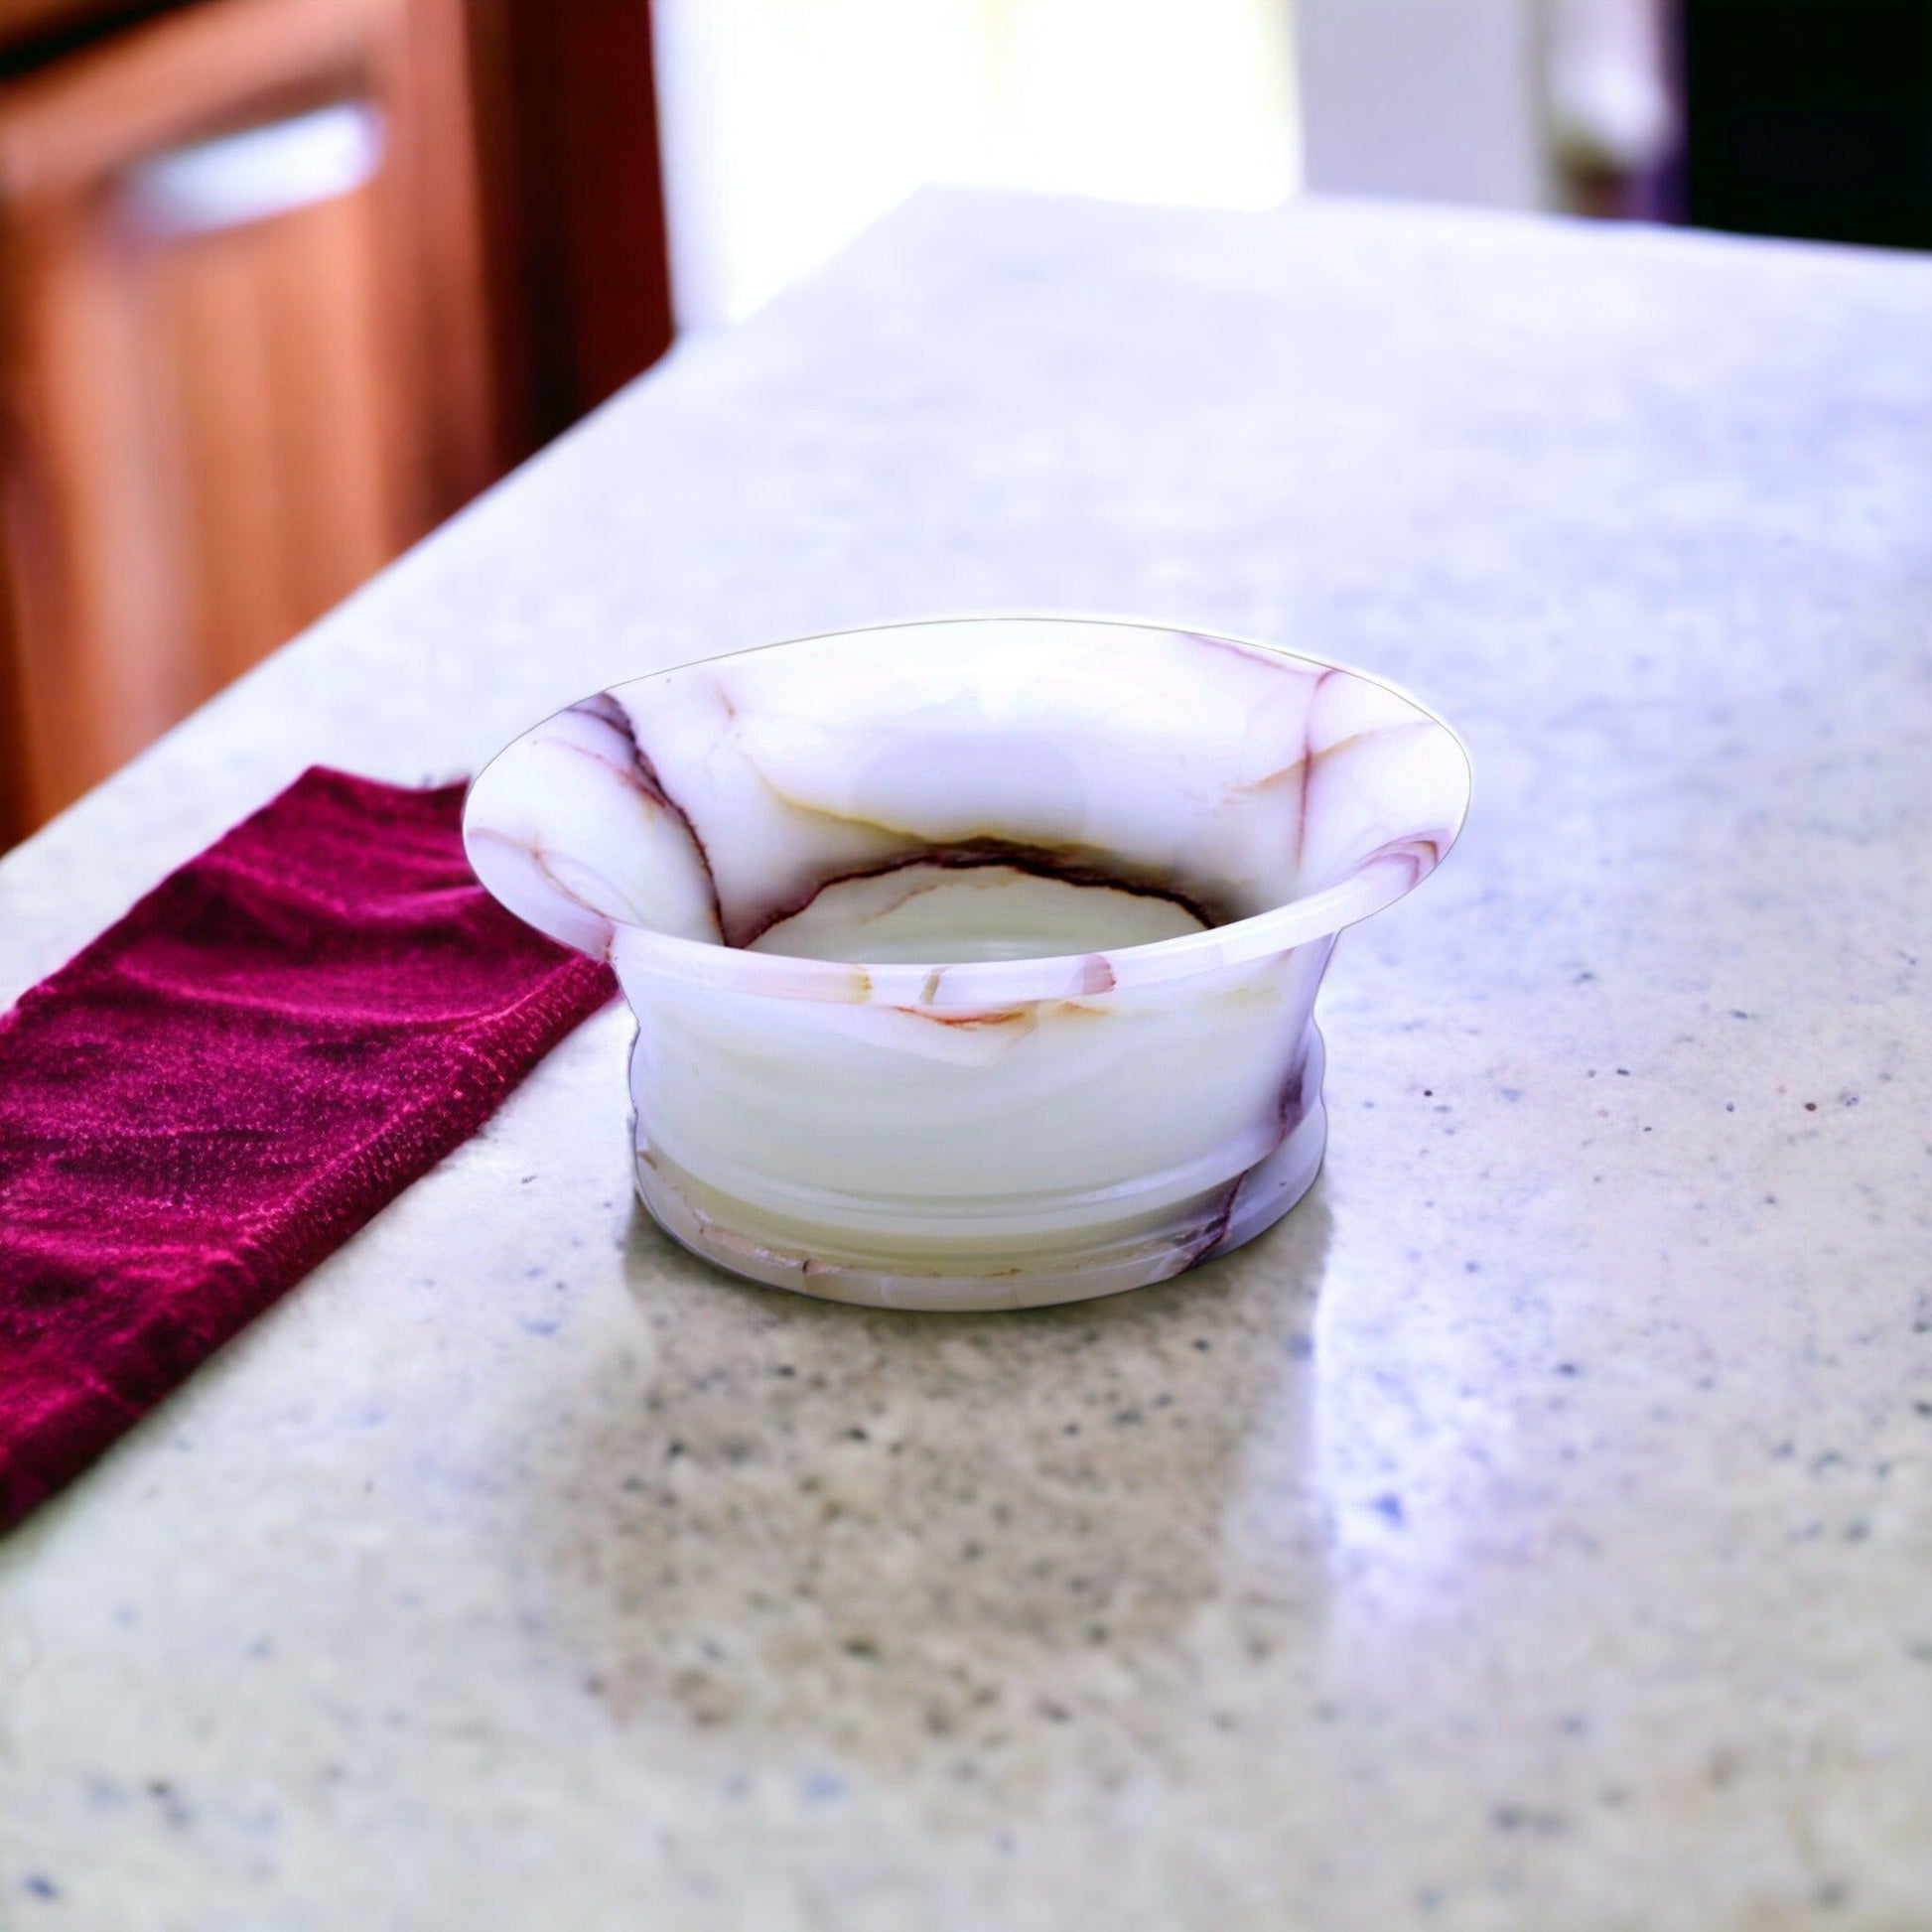 Decorative Fruit Bowl | White Onyx - Nature Home Decor